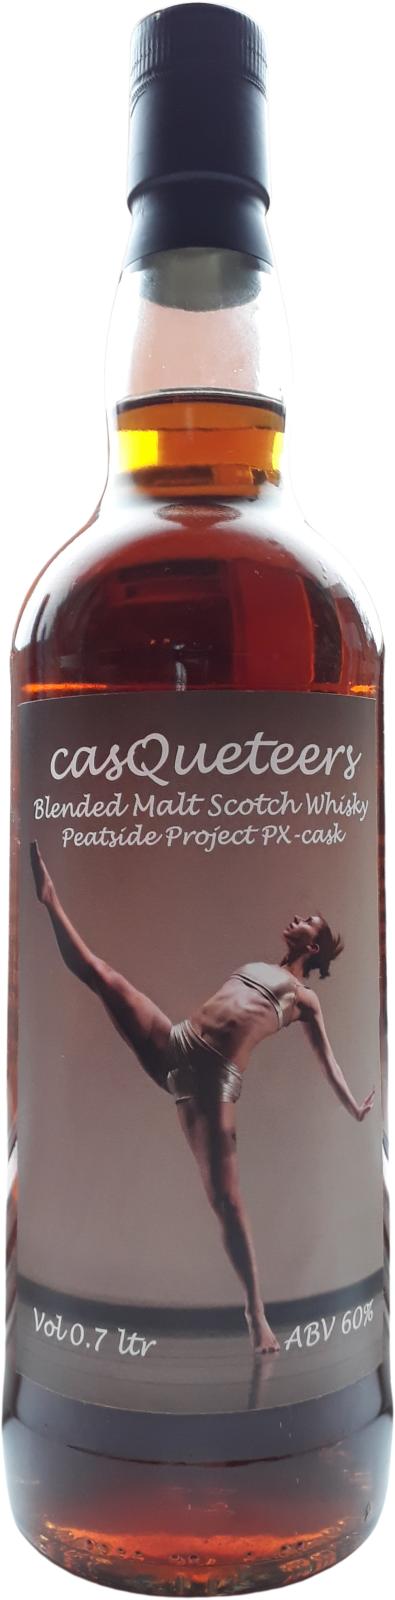 Blended Malt Scotch Whisky 2011 cQs